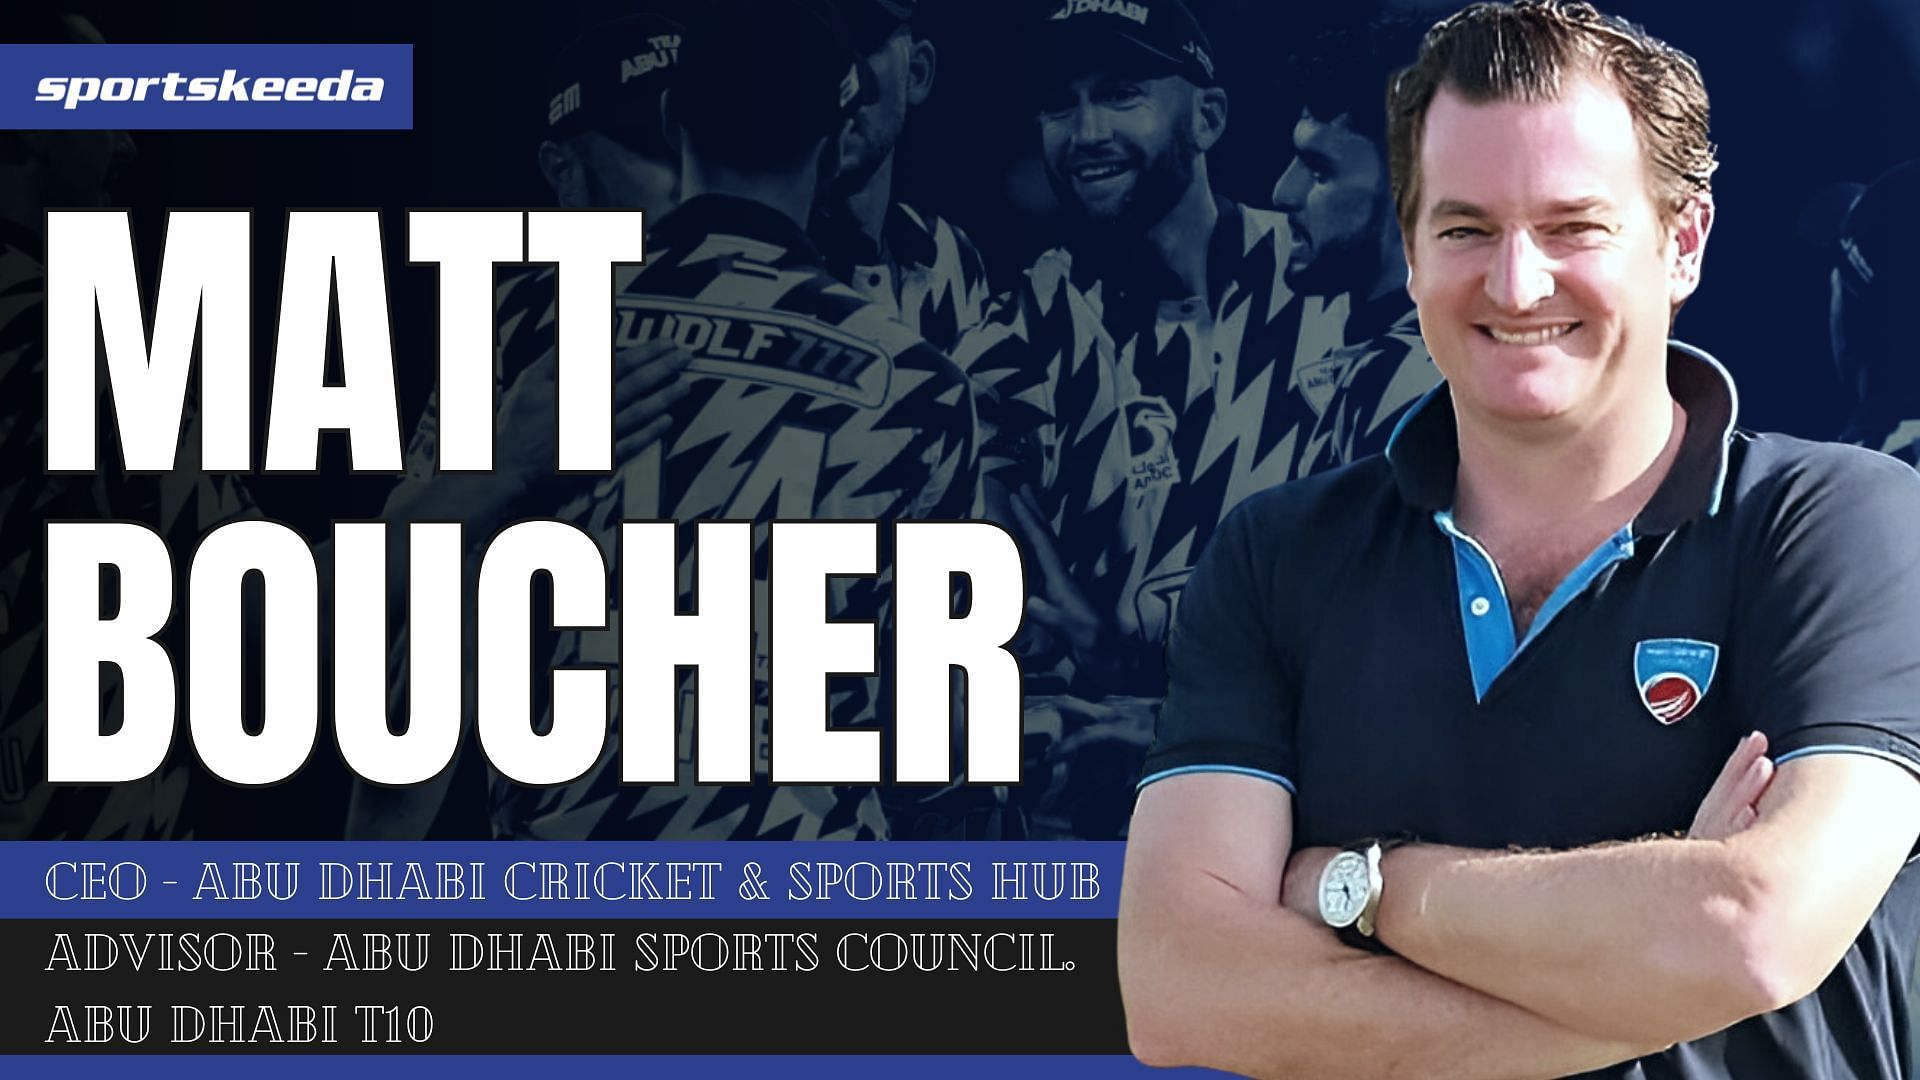  Matthew Boucher, the CEO of Abu Dhabi Cricket &amp; Sports Hub and Advisor to the Abu Dhabi Sports Council (Image via Sportskeeda-BOS)